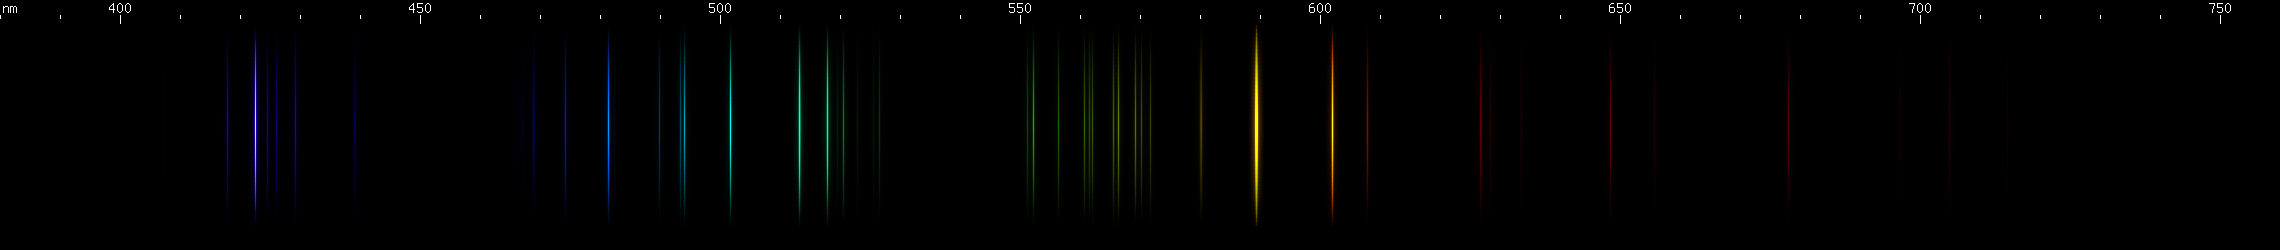 Spectral lines of Germanium.